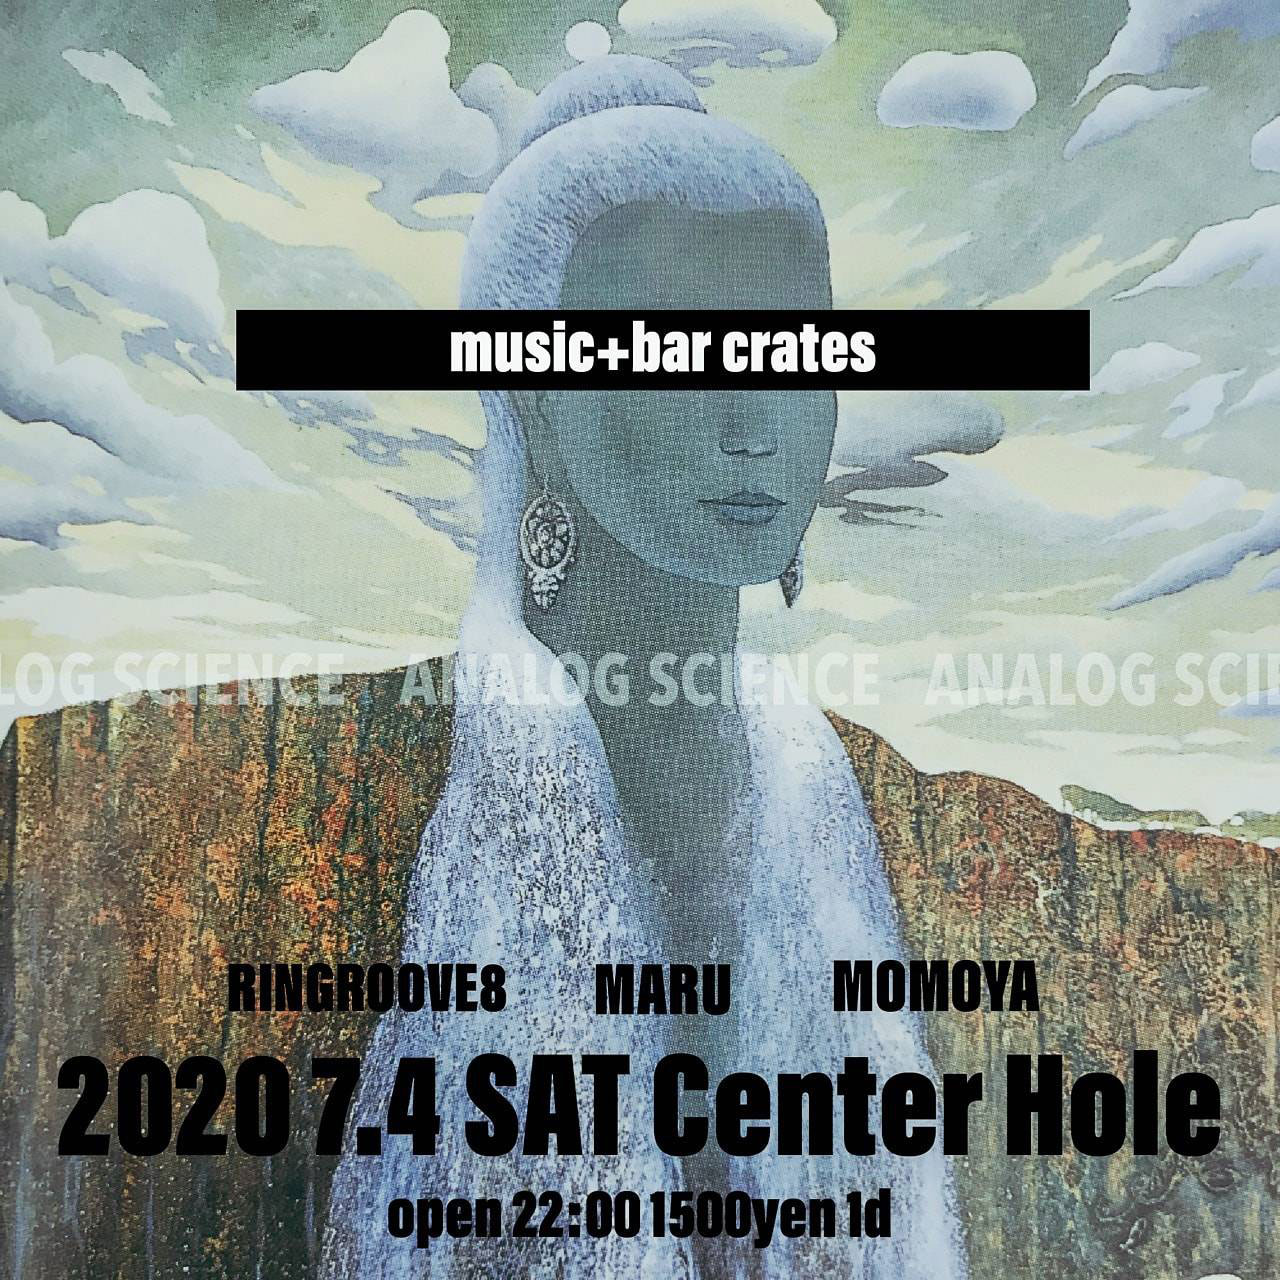 07/04(SAT)Center Hole